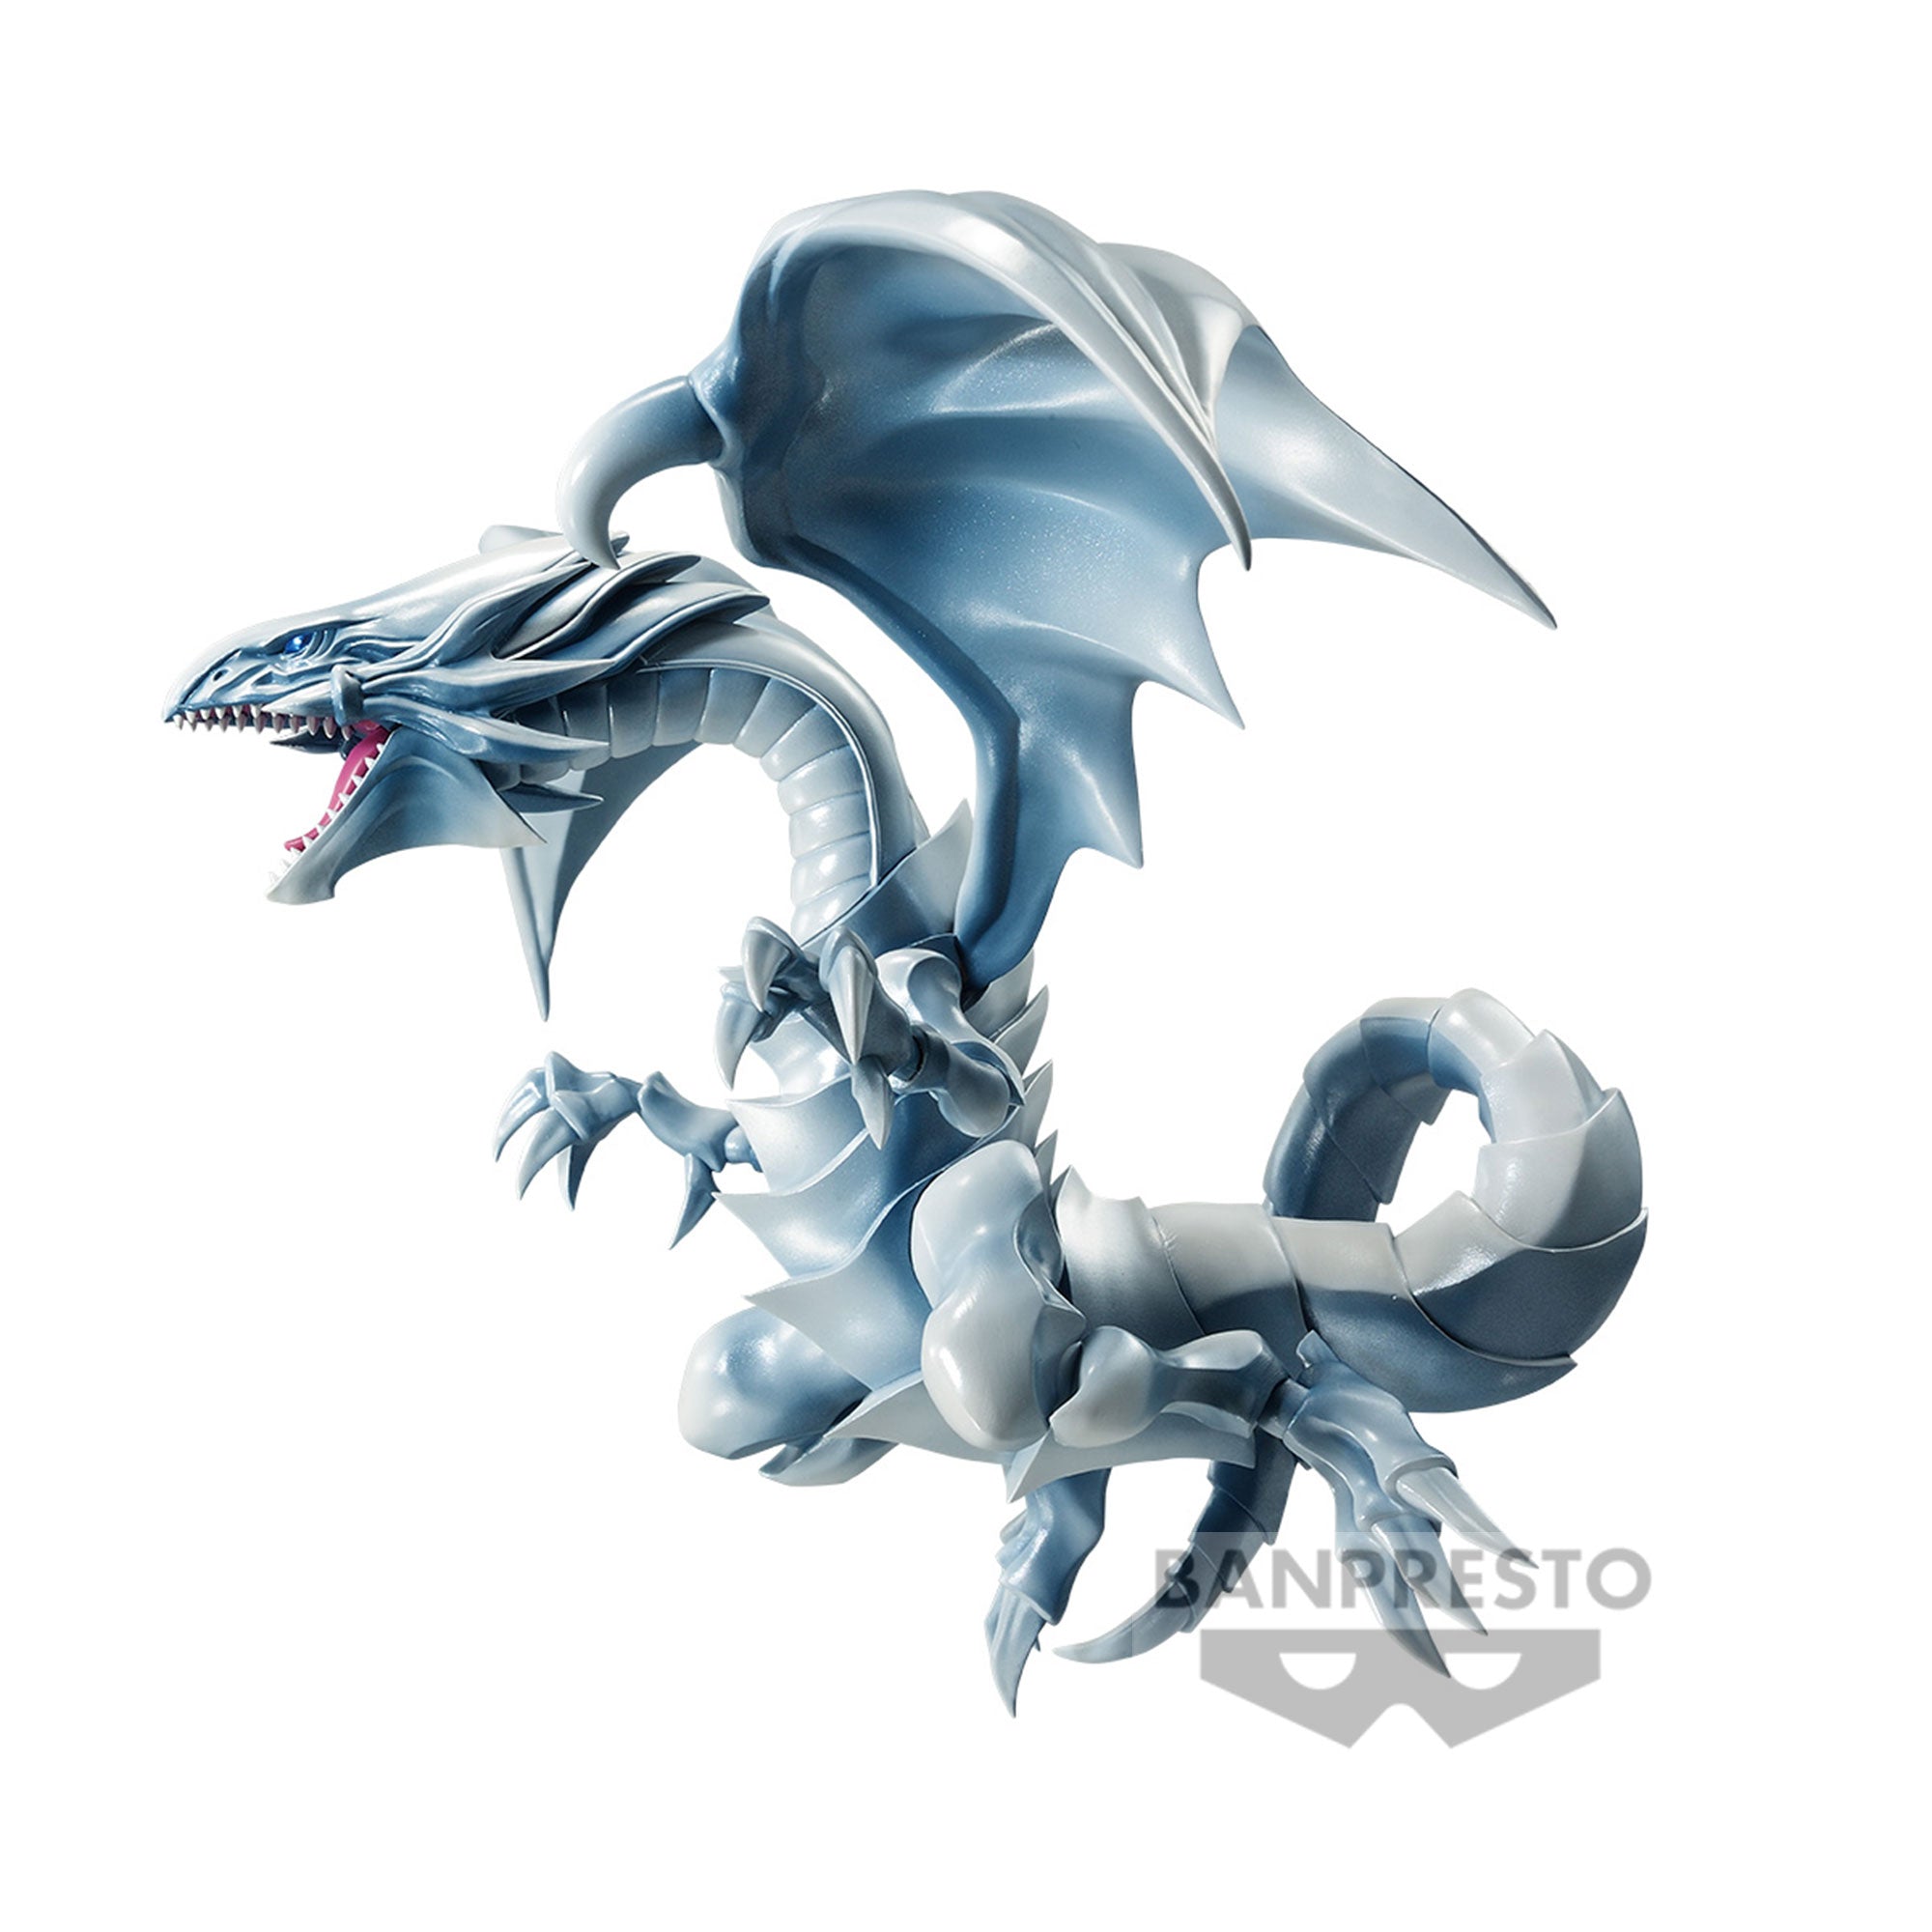 PRE-ORDER Banpresto - Yu-Gi-Oh! Duel Monsters - Blue-Eyes White Dragon